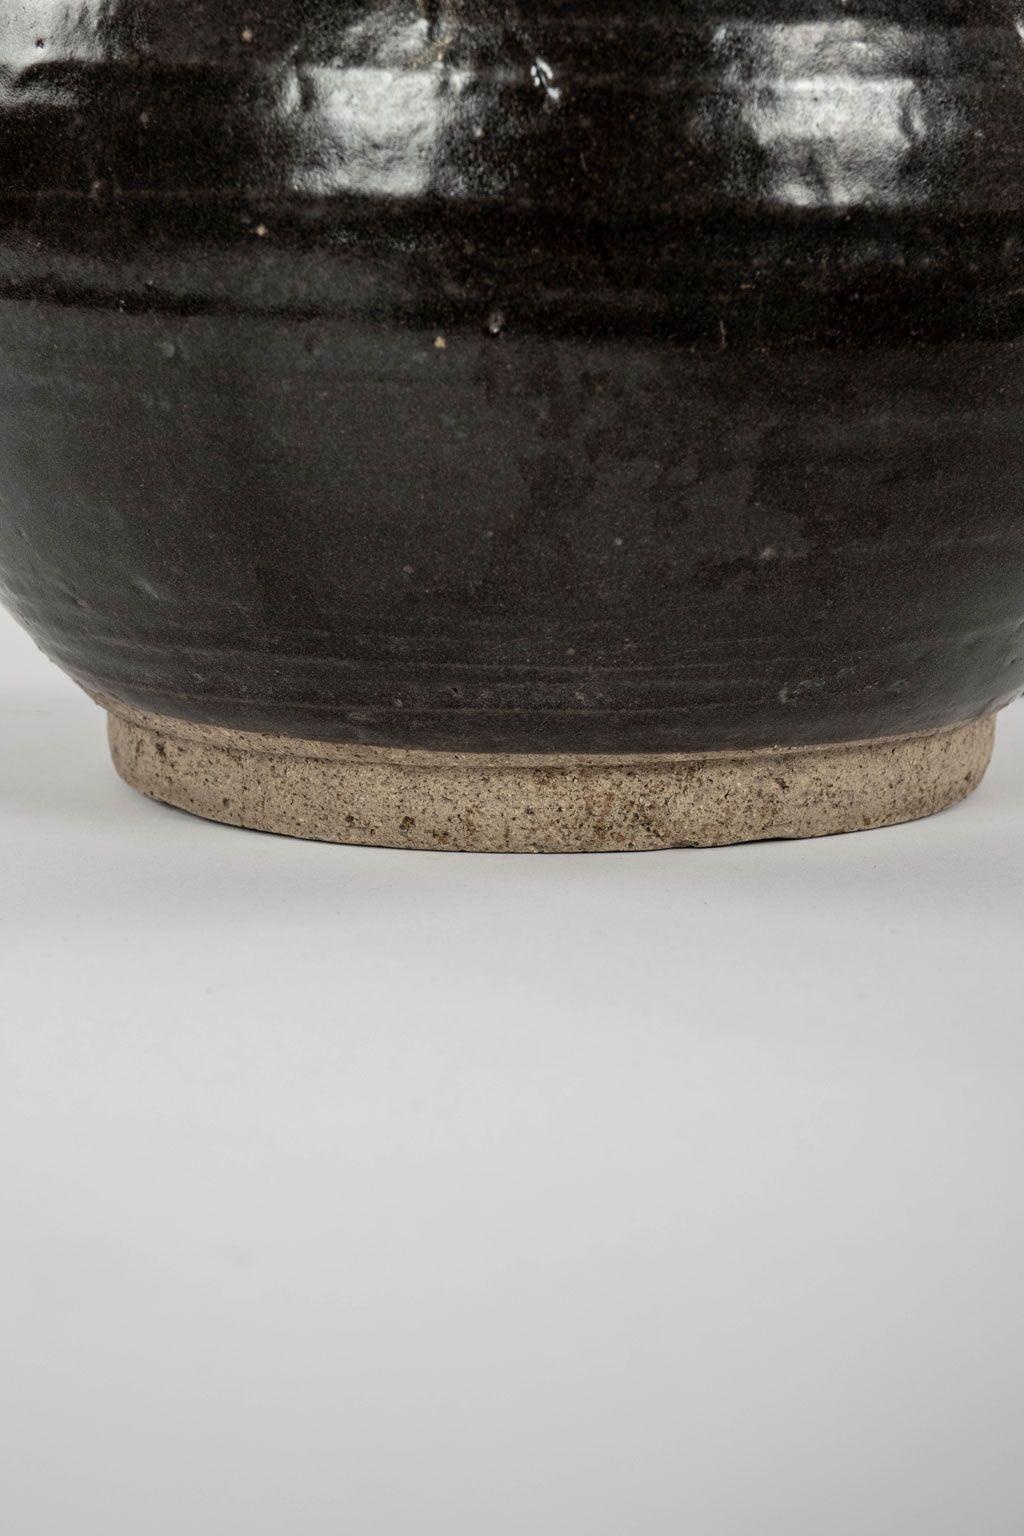 Primitive Matte Dark Brown Glazed Lamp from Antique Chinese Oil Jar